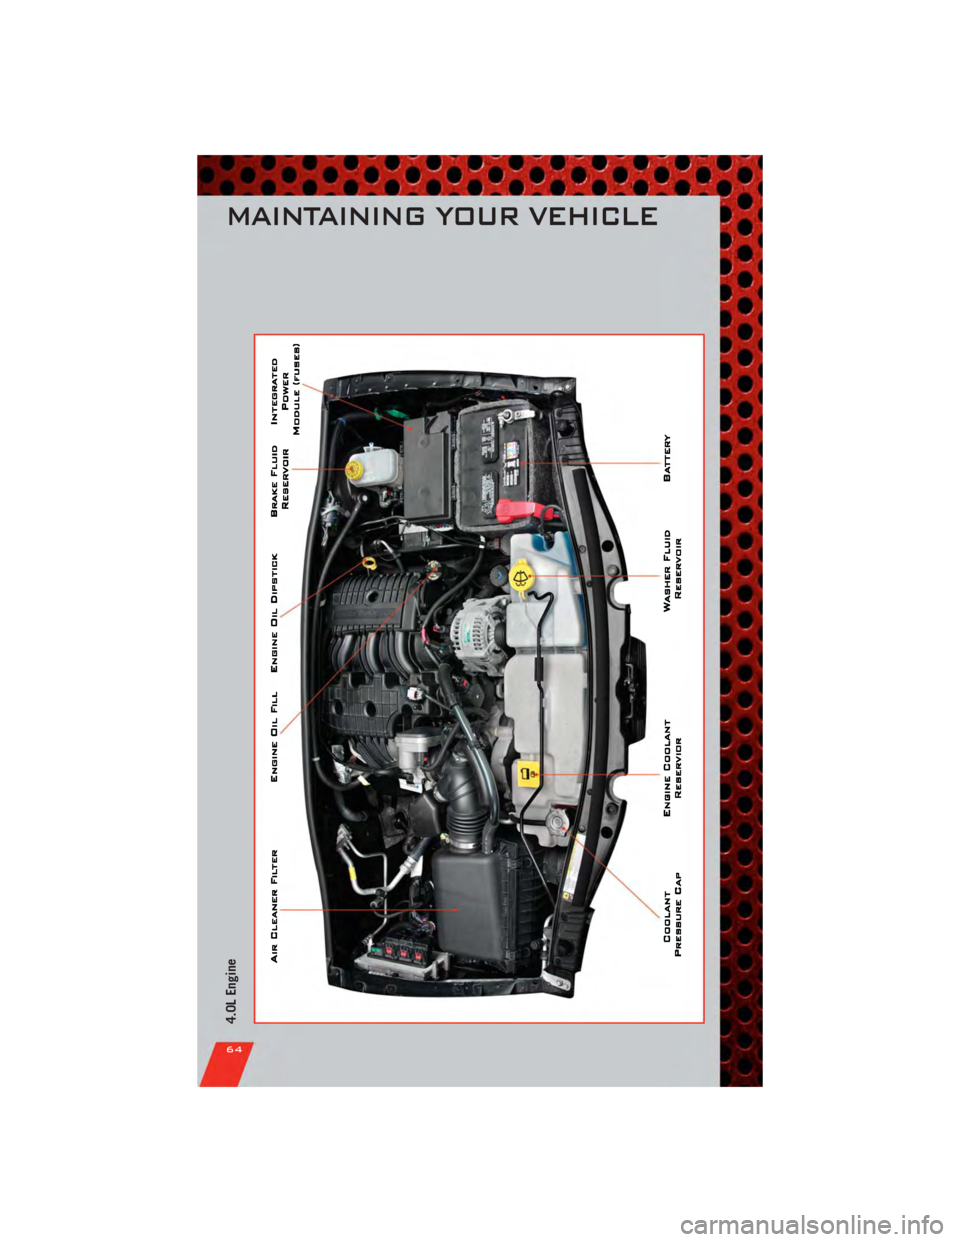 DODGE NITRO 2011 1.G Repair Manual 4.0L Engine
MAINTAINING YOUR VEHICLE
64 